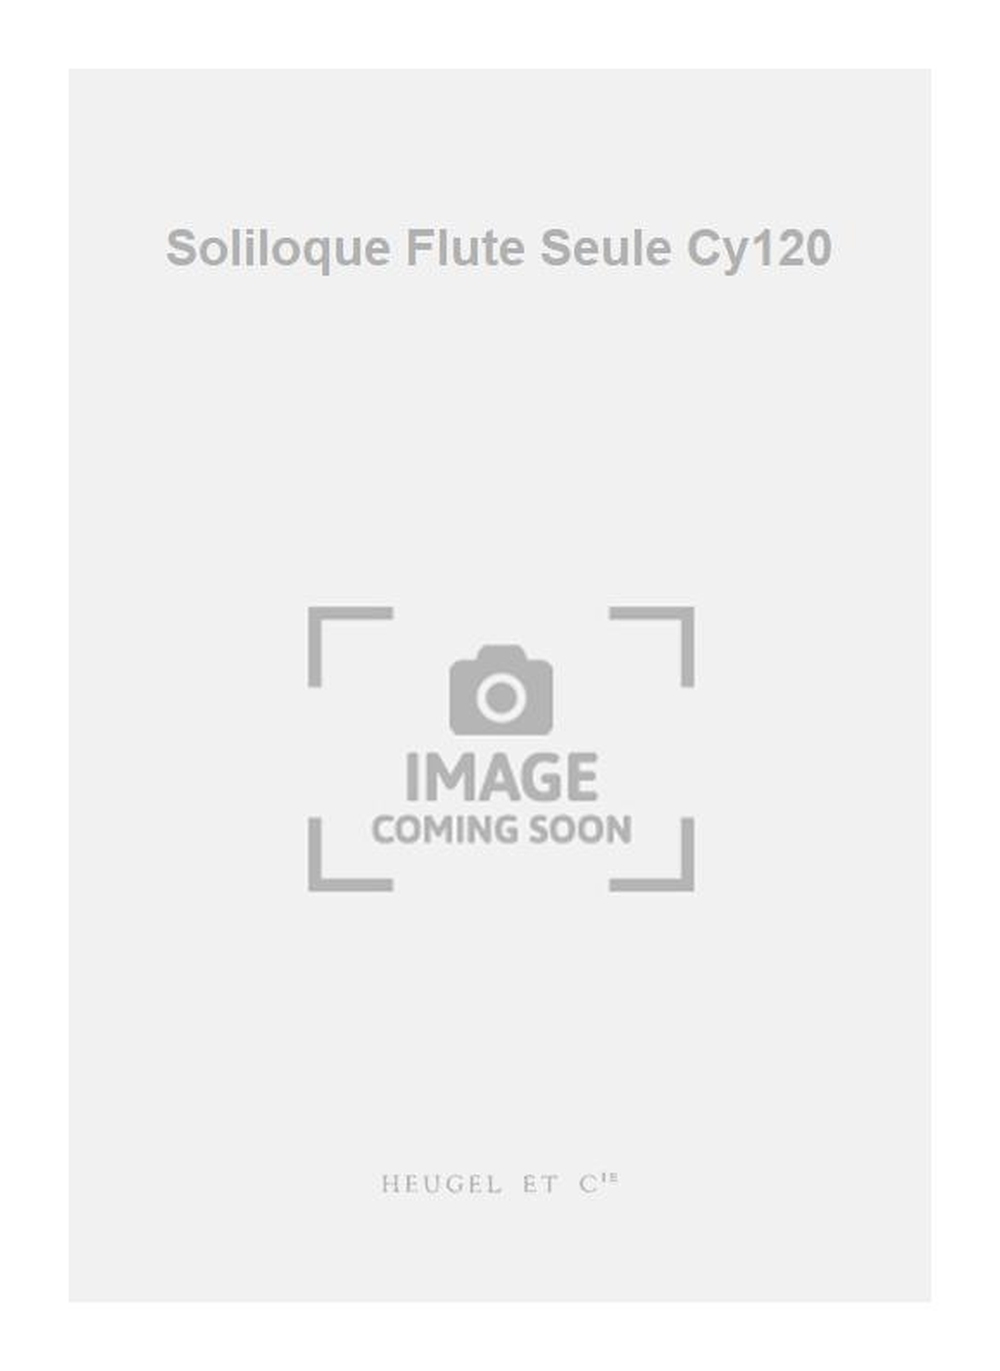 Serge Paloyan: Soliloque Flute Seule Cy120